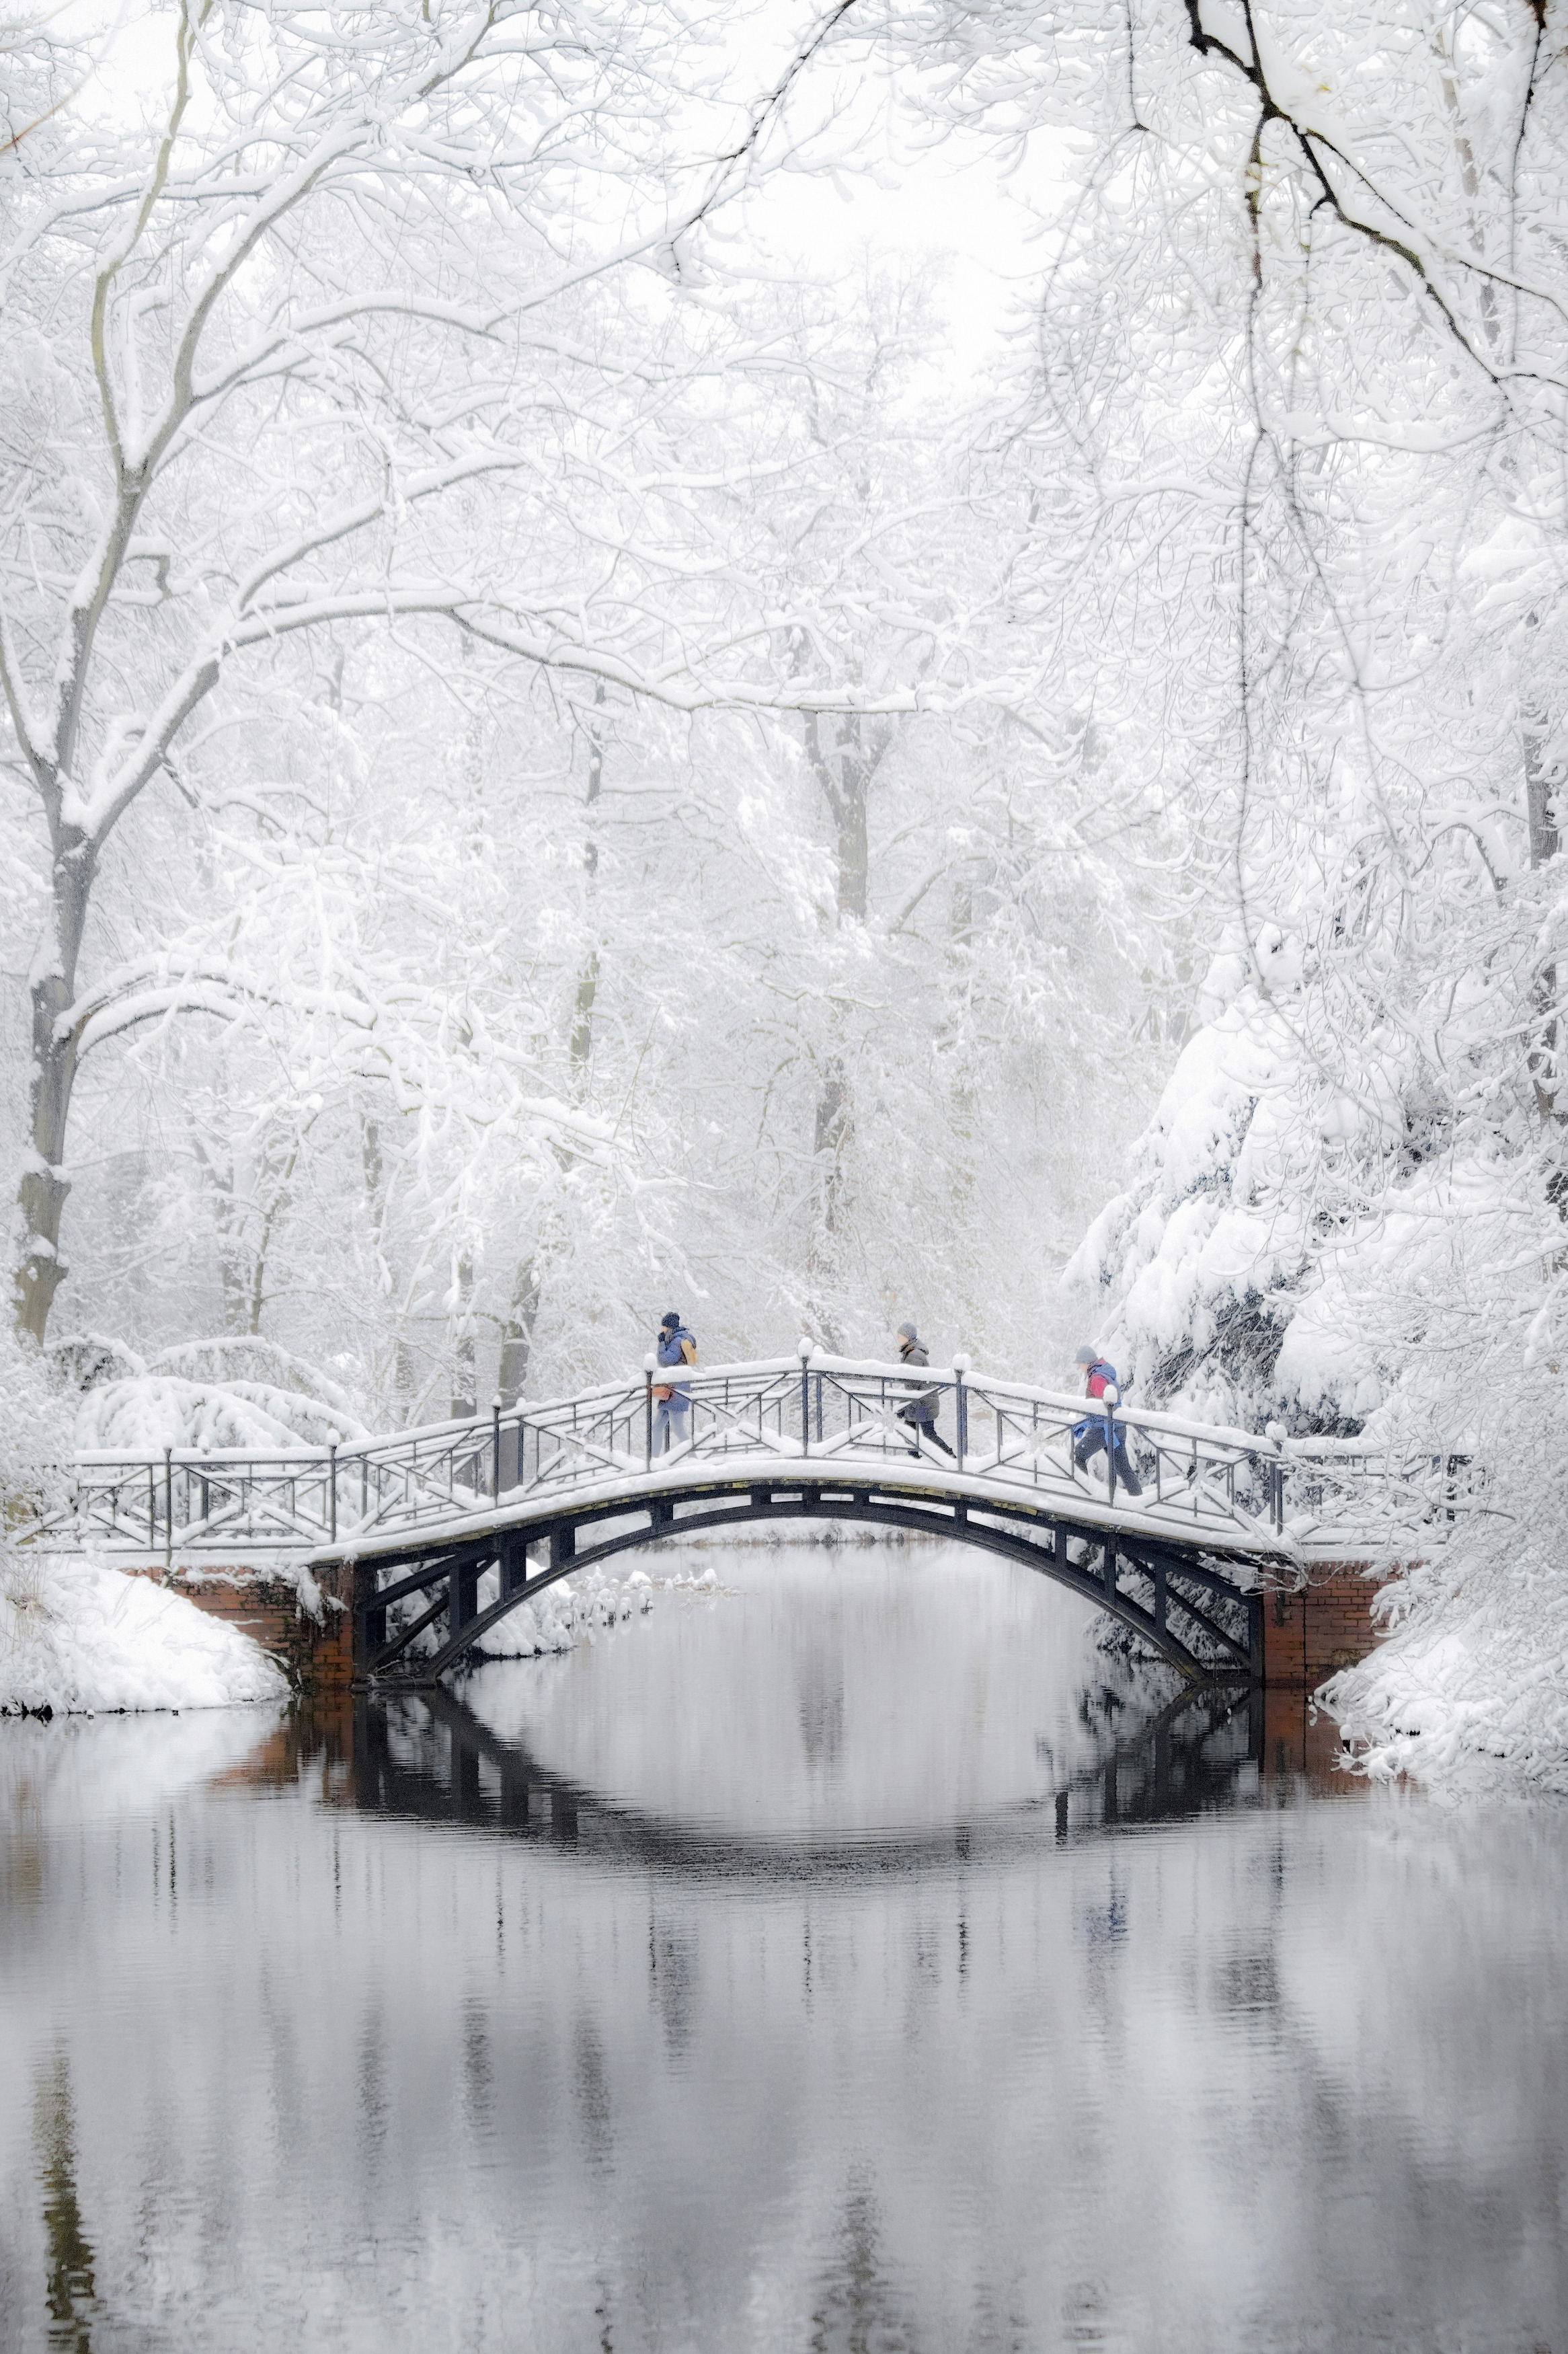 Vertical, Photography, Snow, Winter, Bridge, Nature, Cold, Tree, Frozen, Architecture, Water, Park, Pszczyna, Damian Cyfka